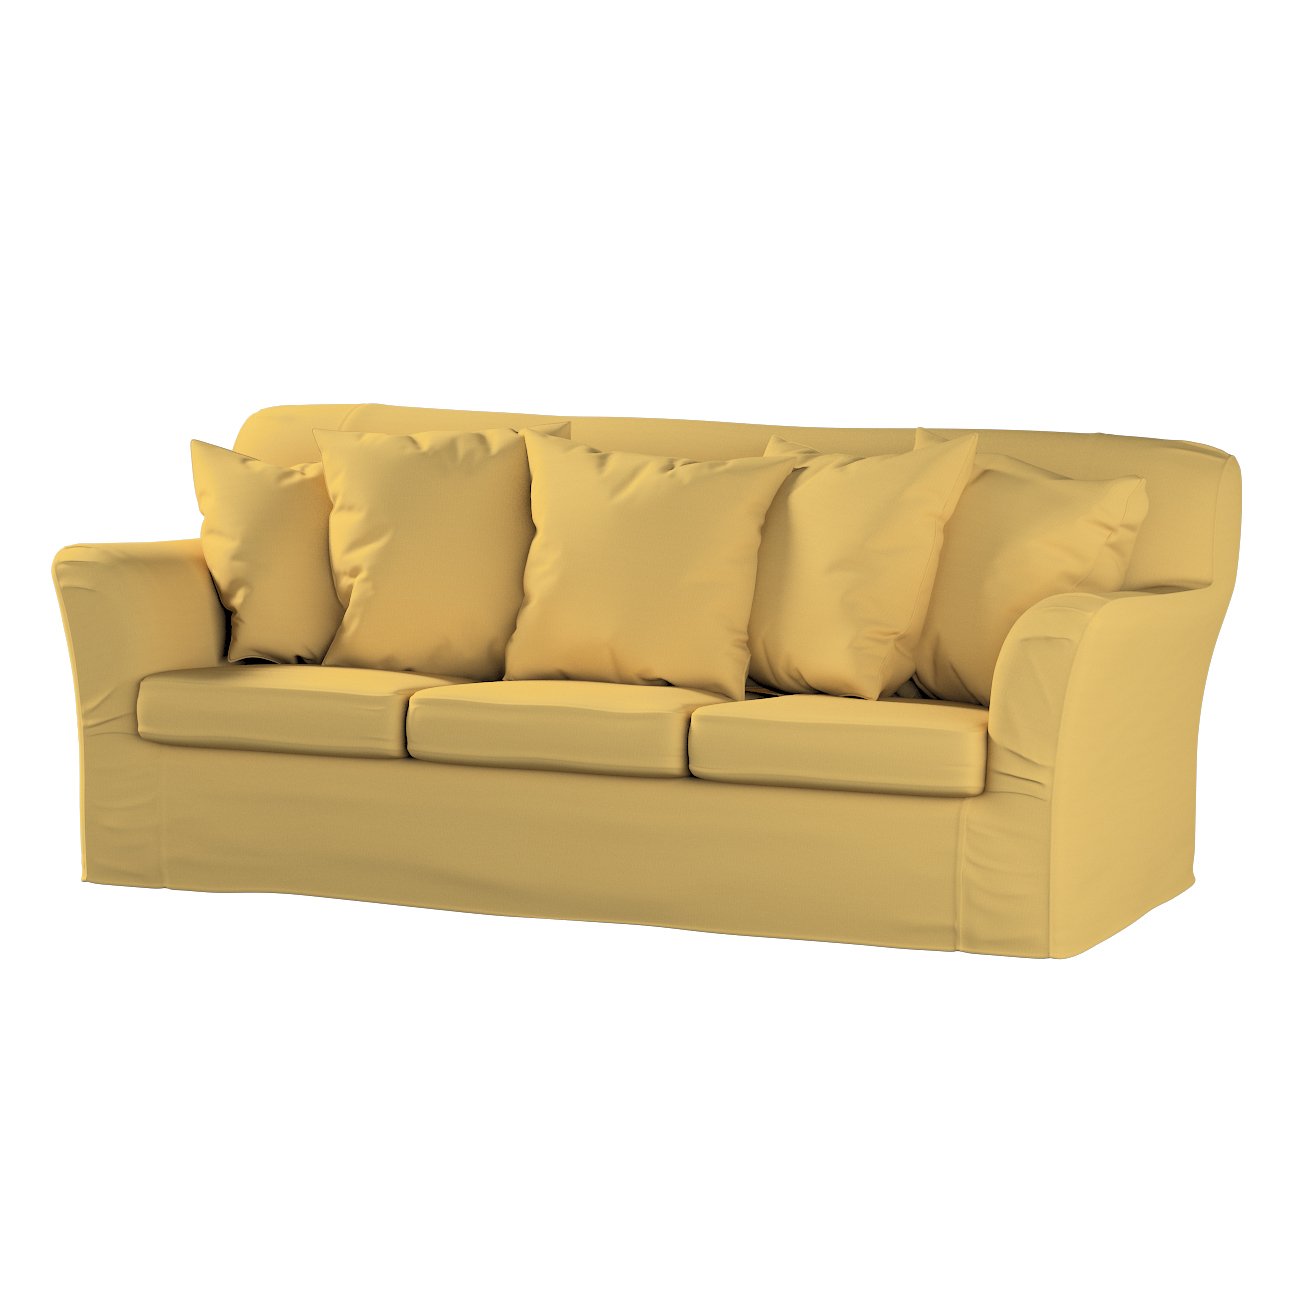 Dekoria Poťah na sedačku Tomelilla (pre 3 osoby), matná žltá, Poťah na sedačku Tomelilla - pre 3 osoby, Cotton Panama, 702-41